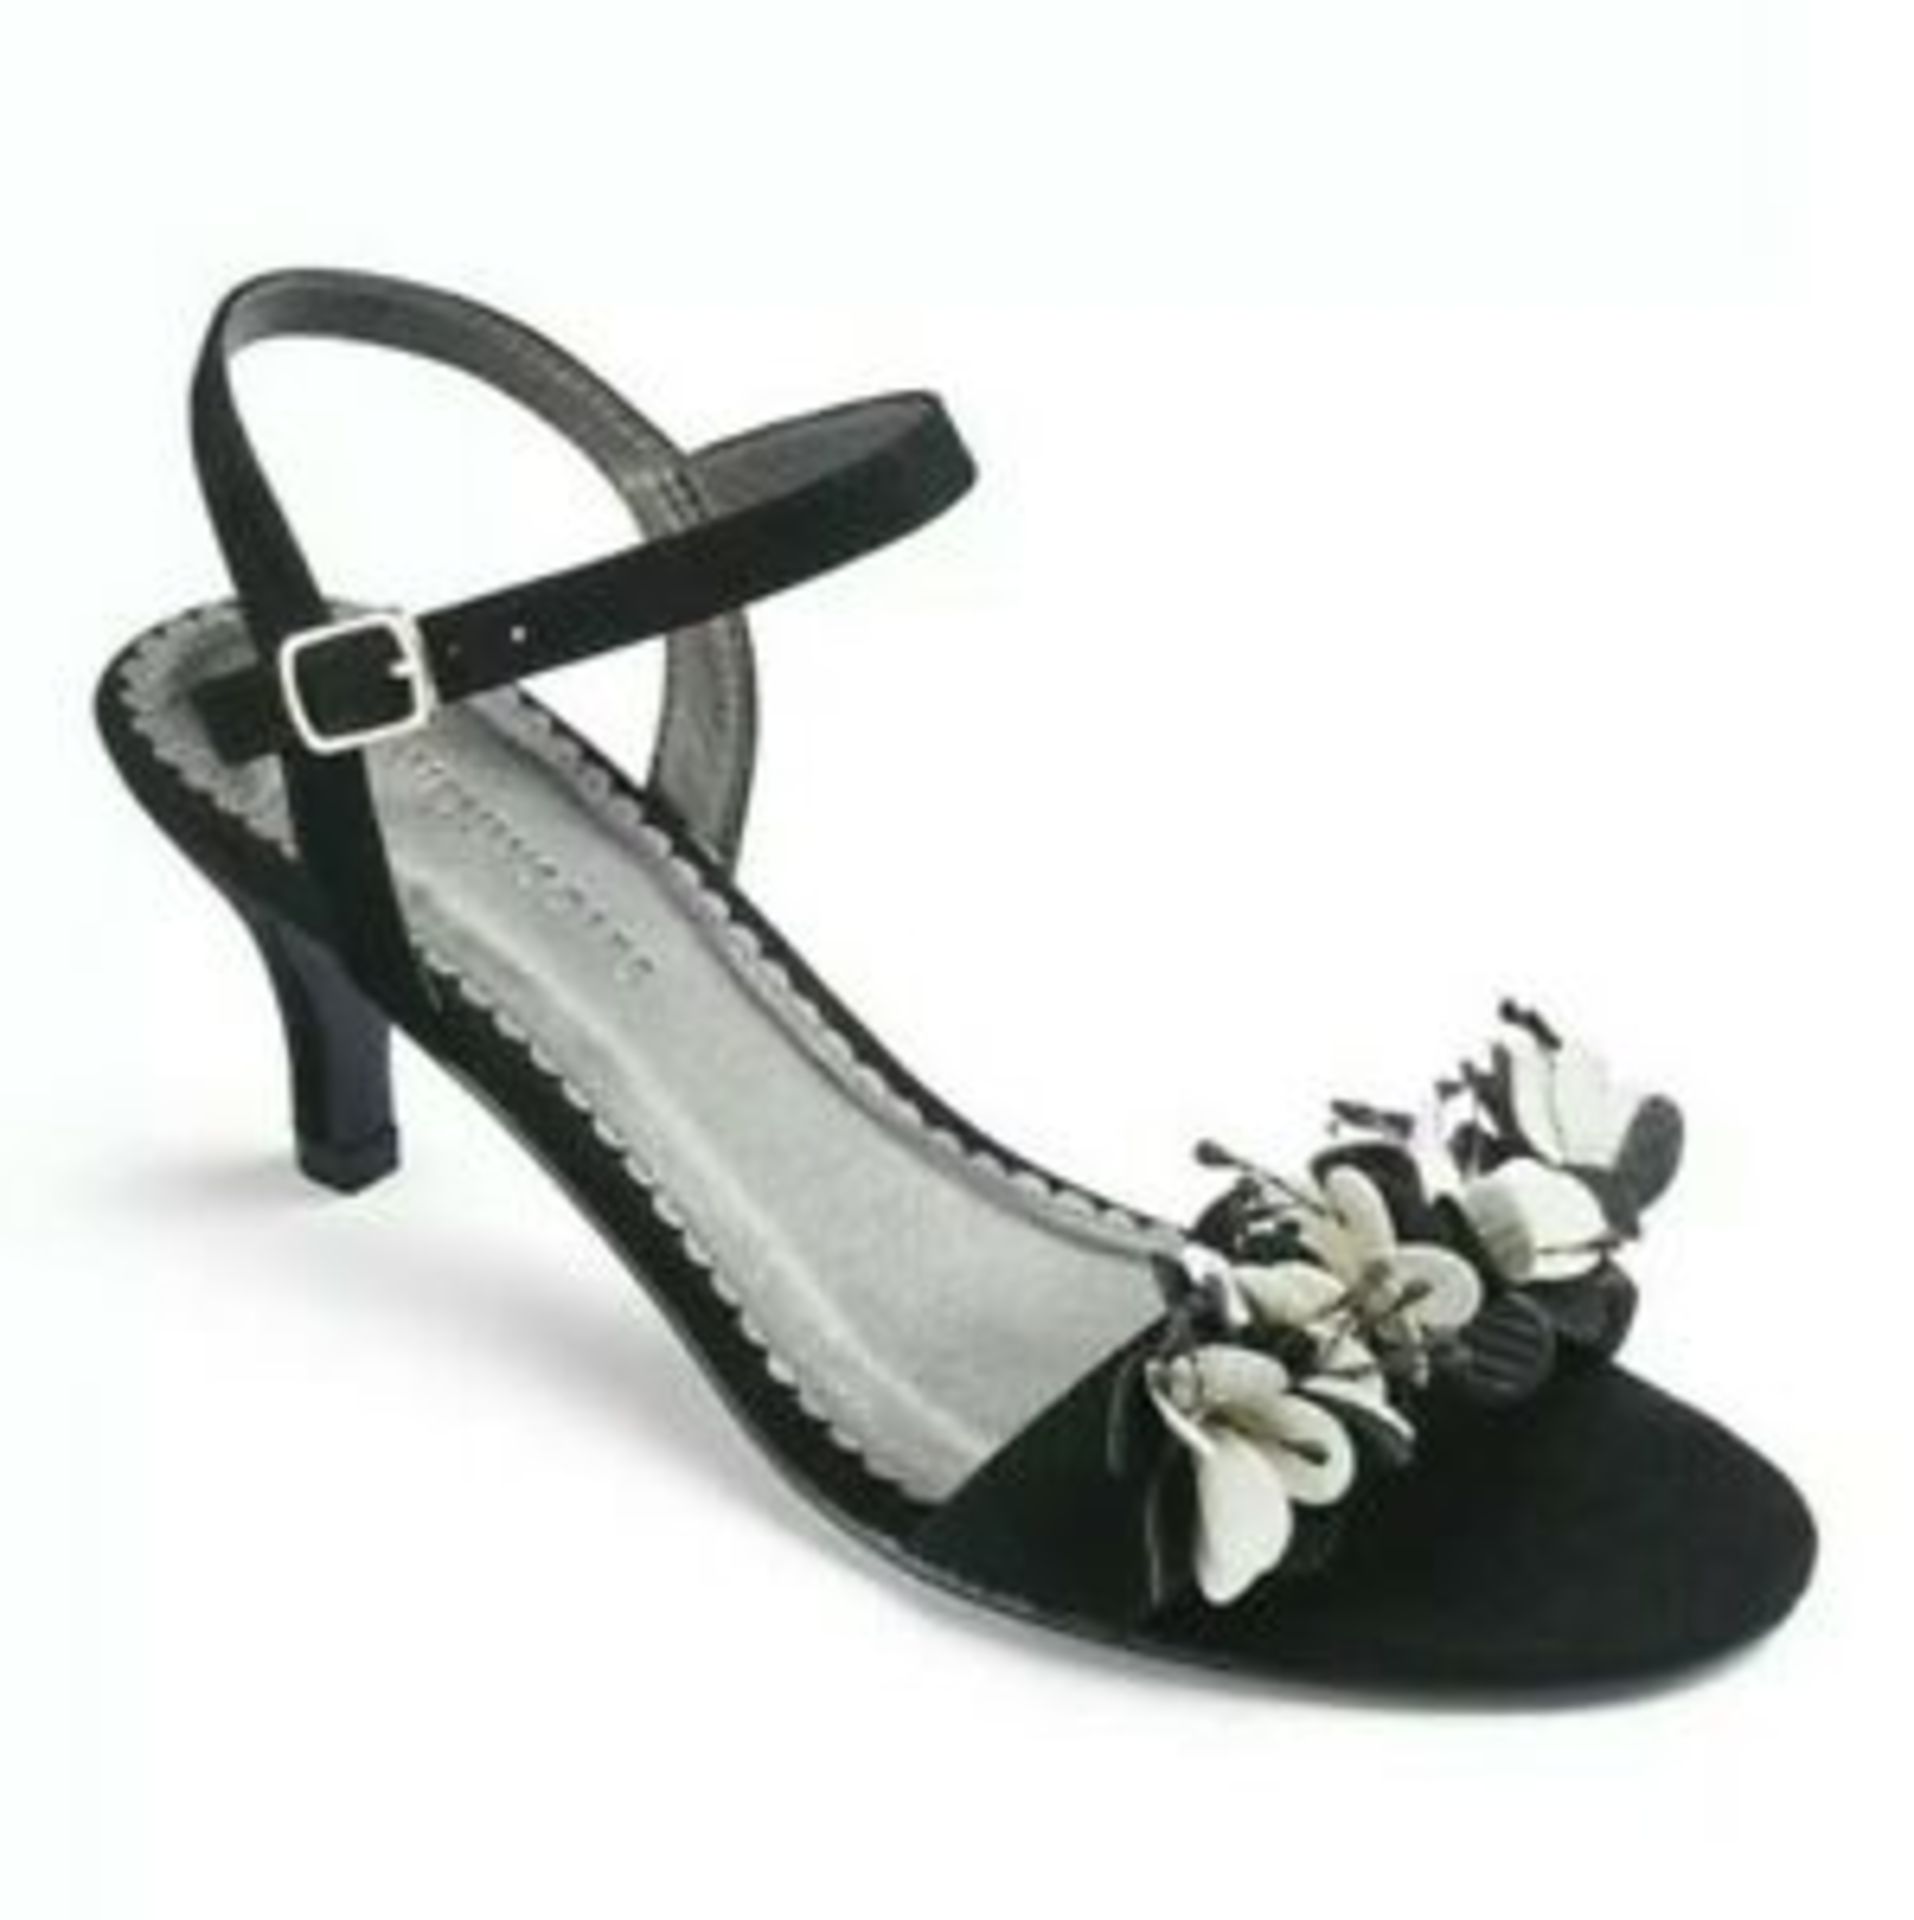 + VAT Brand New Pair Ladies Black Ivory E Fit Sandals Size 5